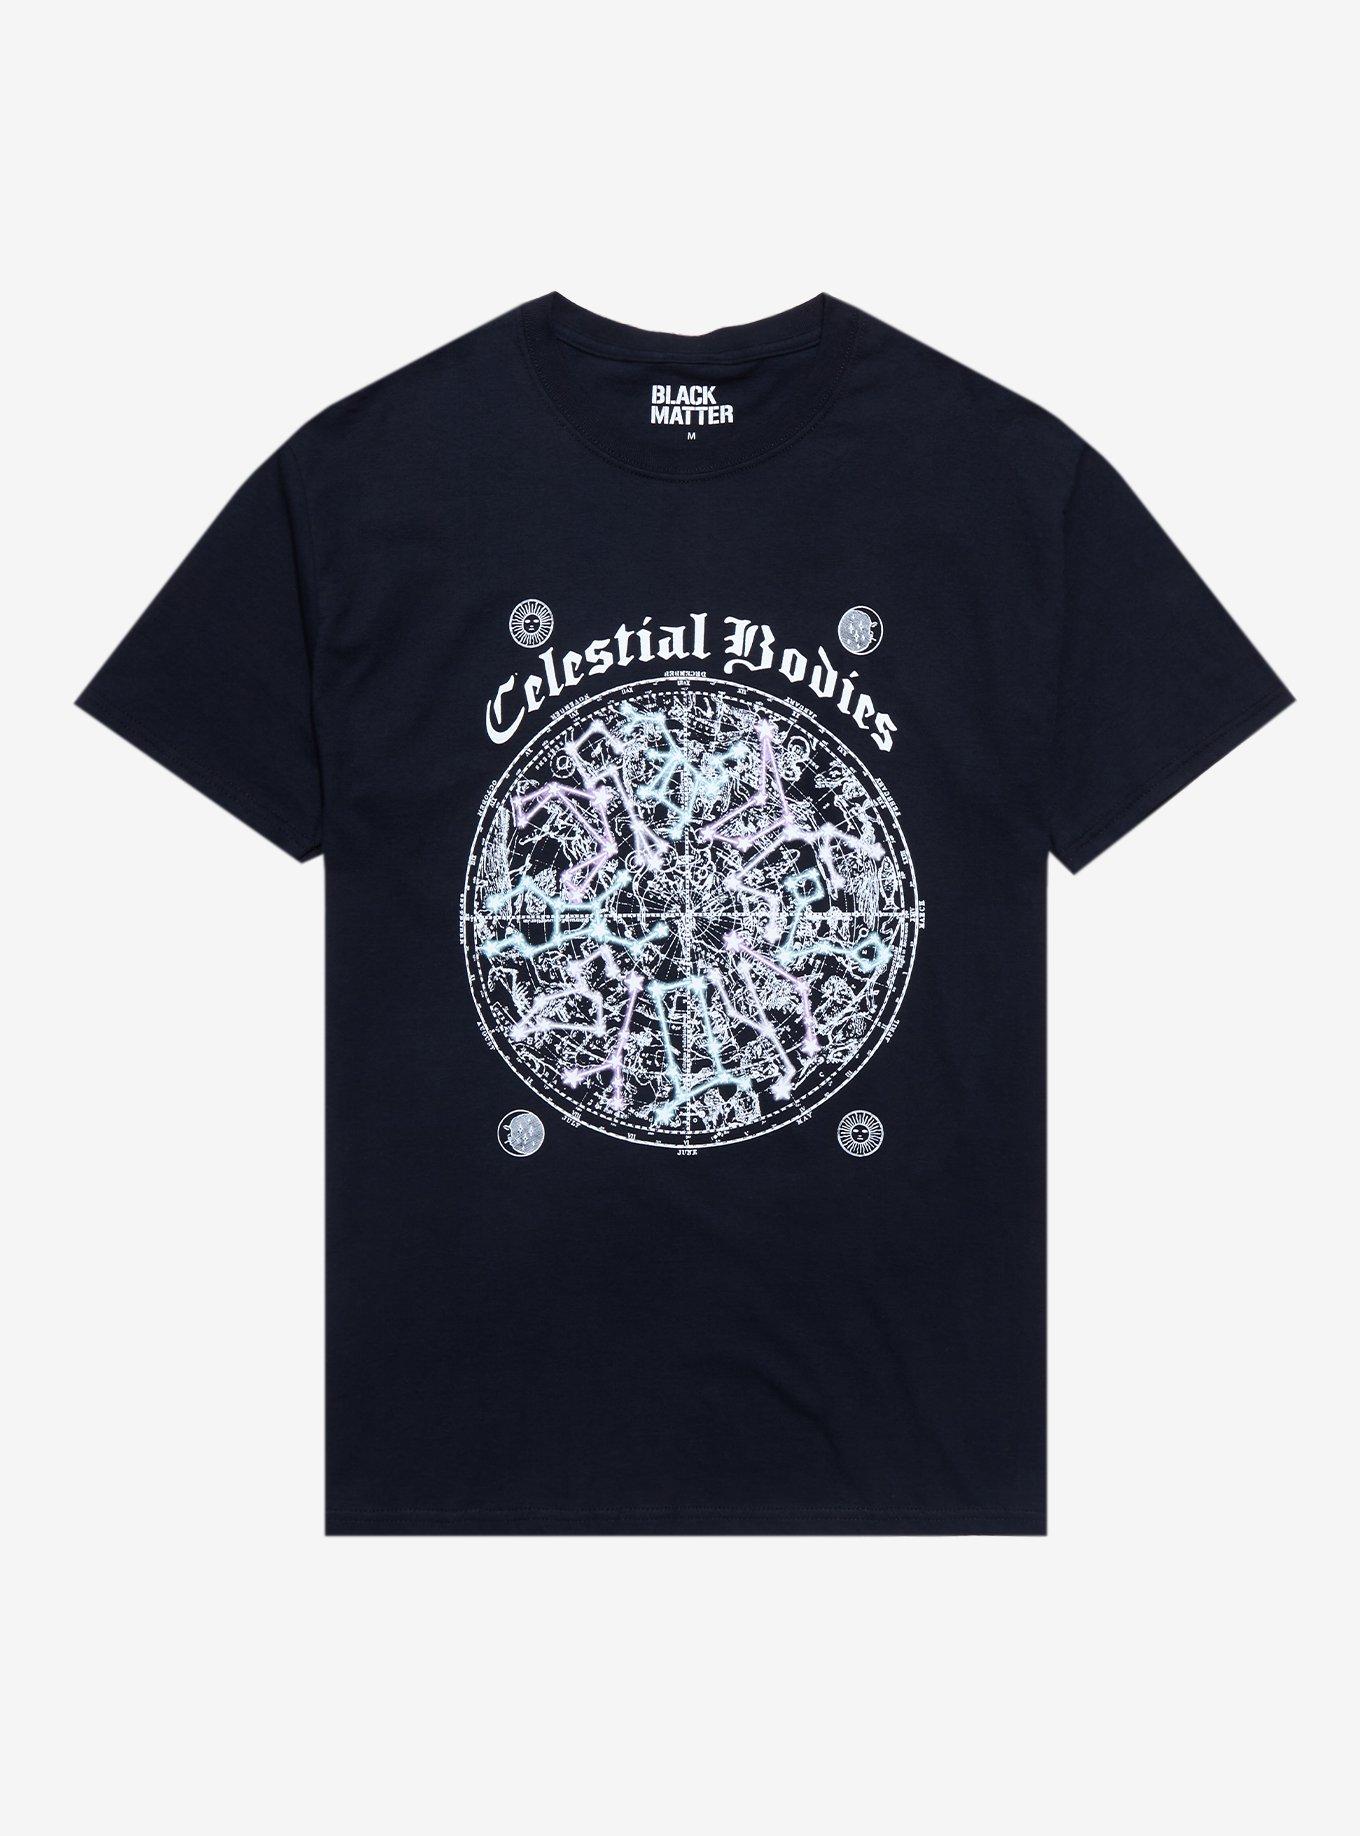 Celestial Bodies Diagram Boyfriend Fit Girls T-Shirt, MULTI, hi-res